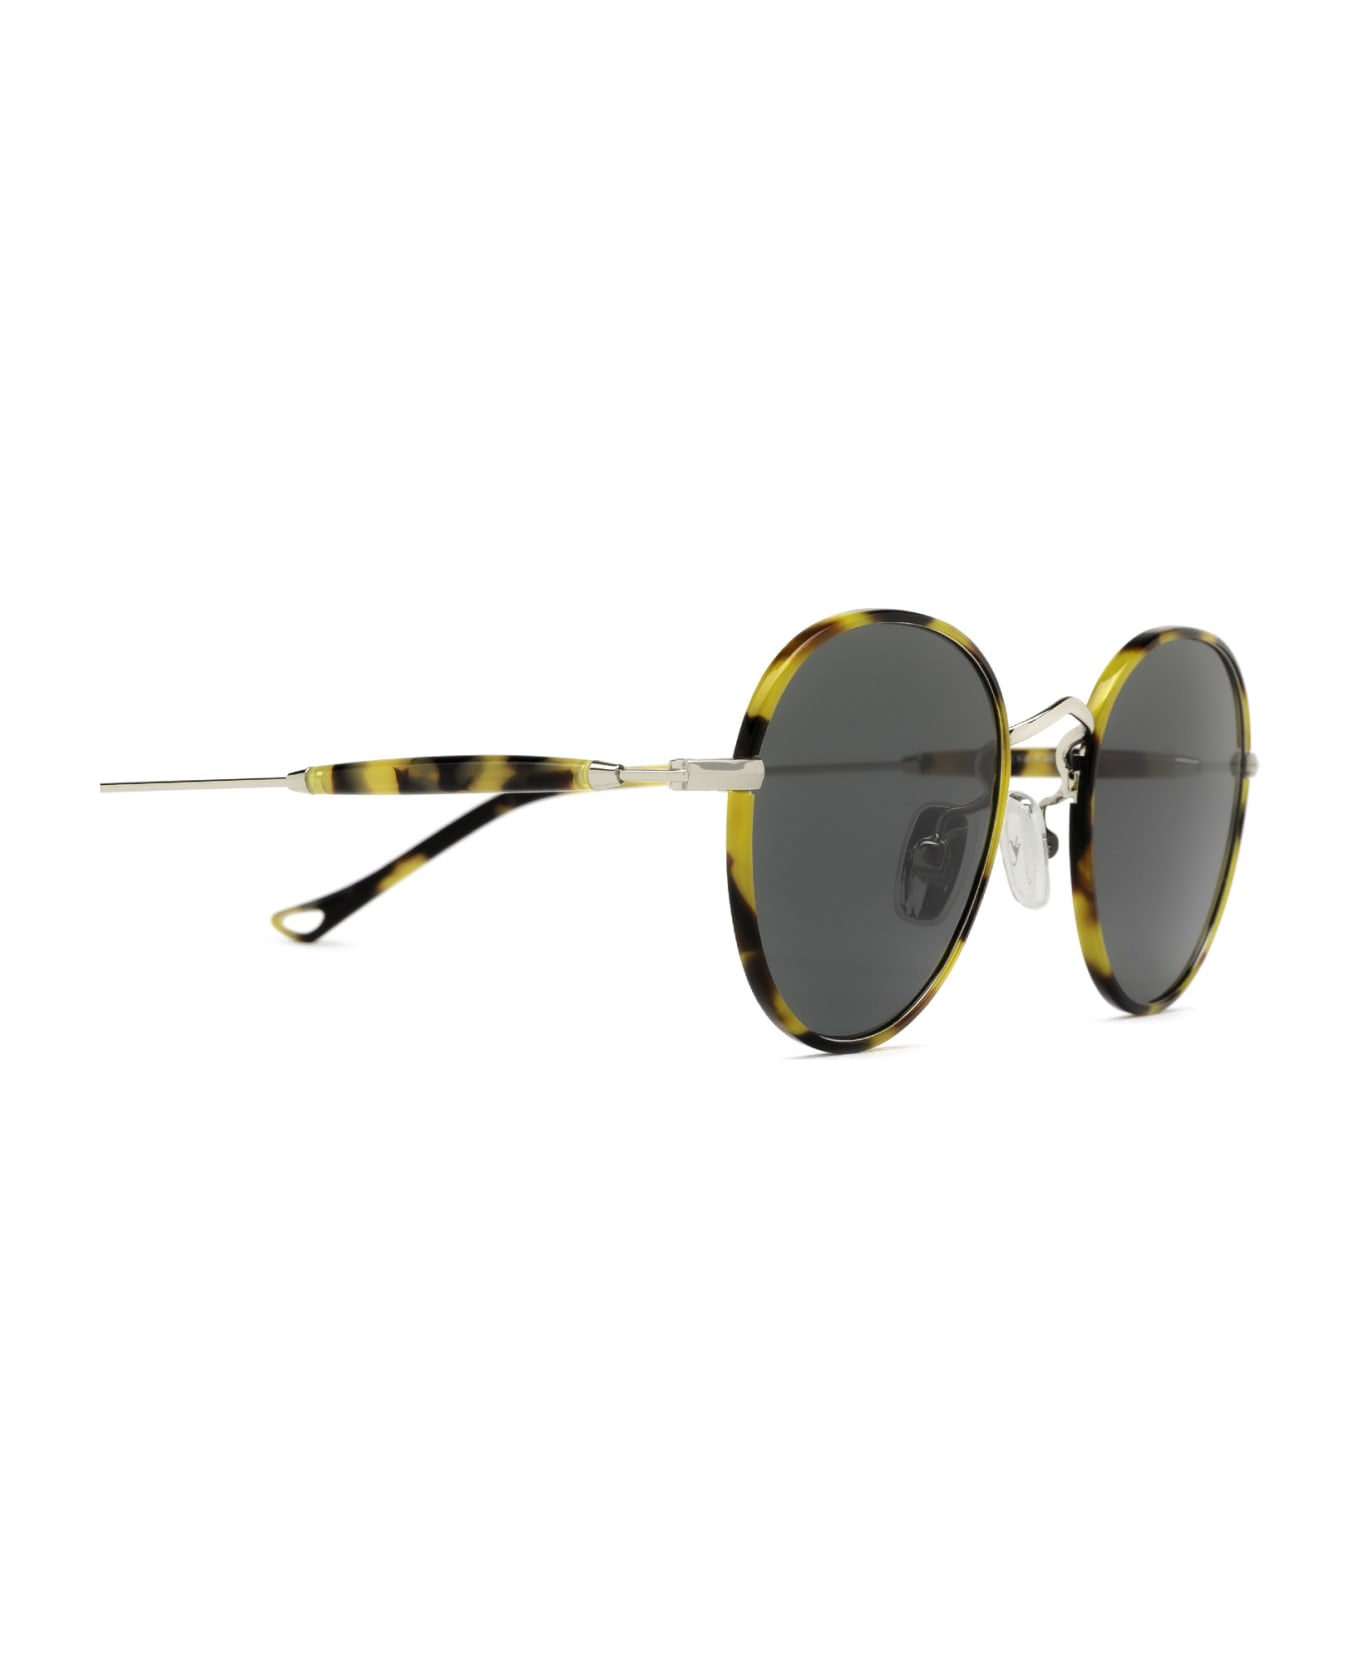 Eyepetizer Cinq Havana Sunglasses - Havana